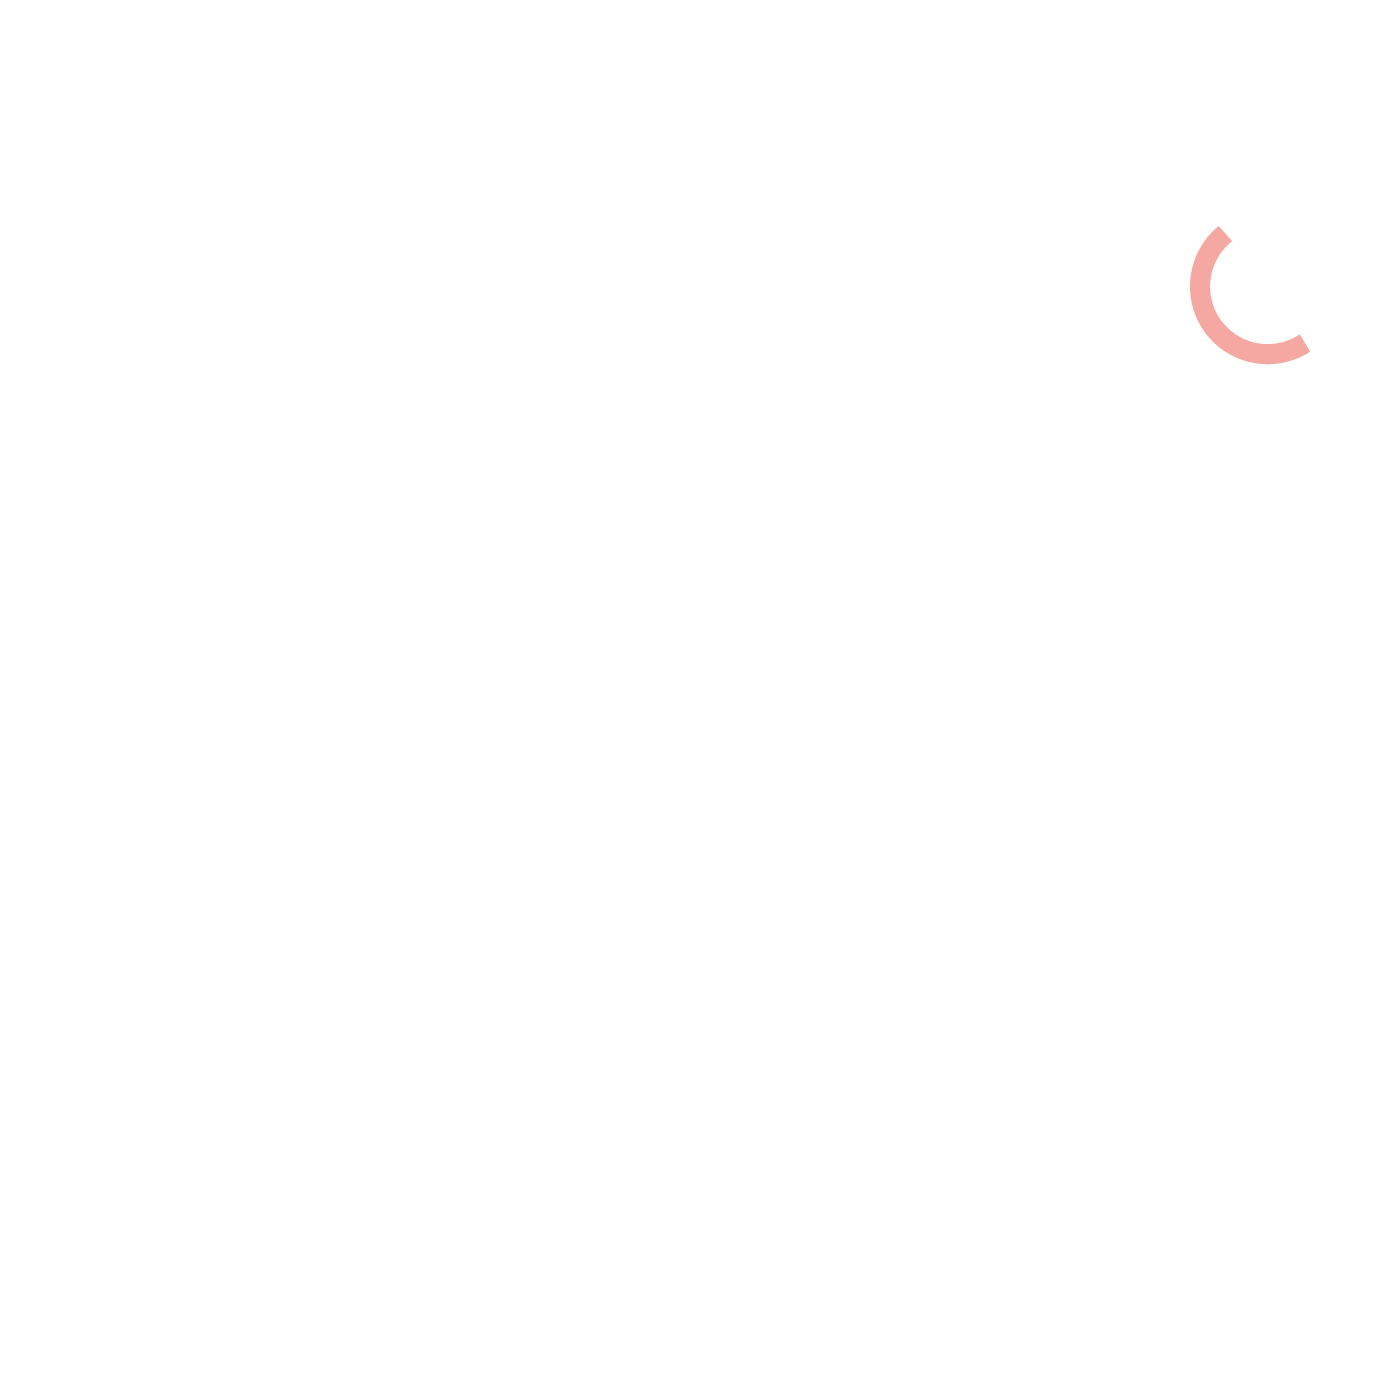 powerful science